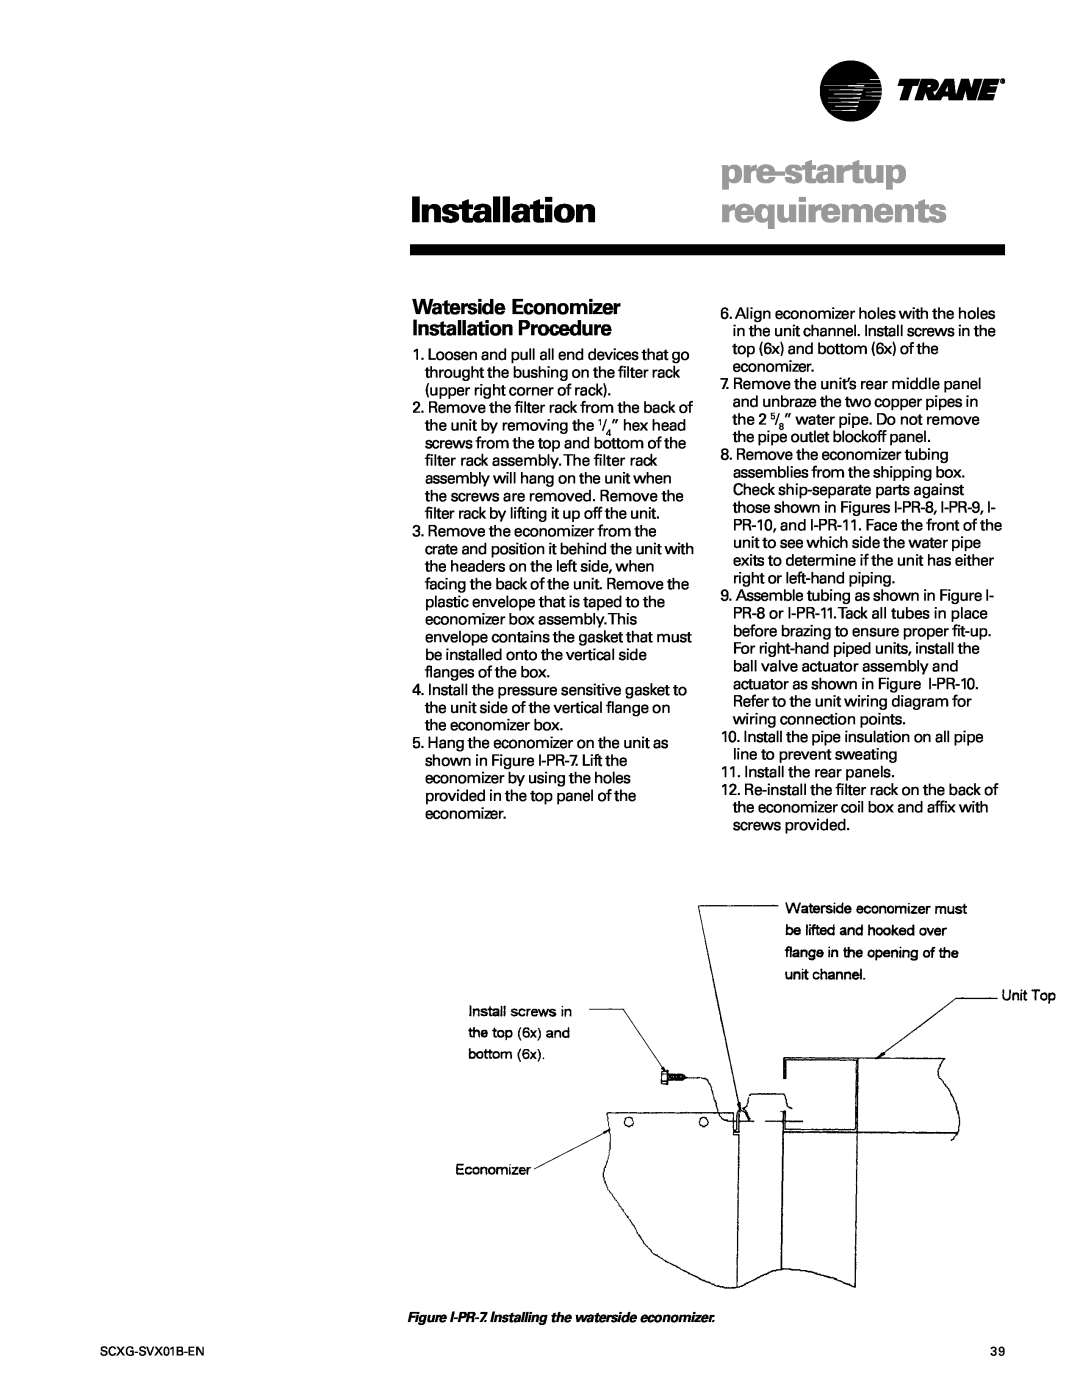 Trane SCXG-SVX01B-EN manual Waterside Economizer Installation Procedure, pre-startup, Installation requirements 